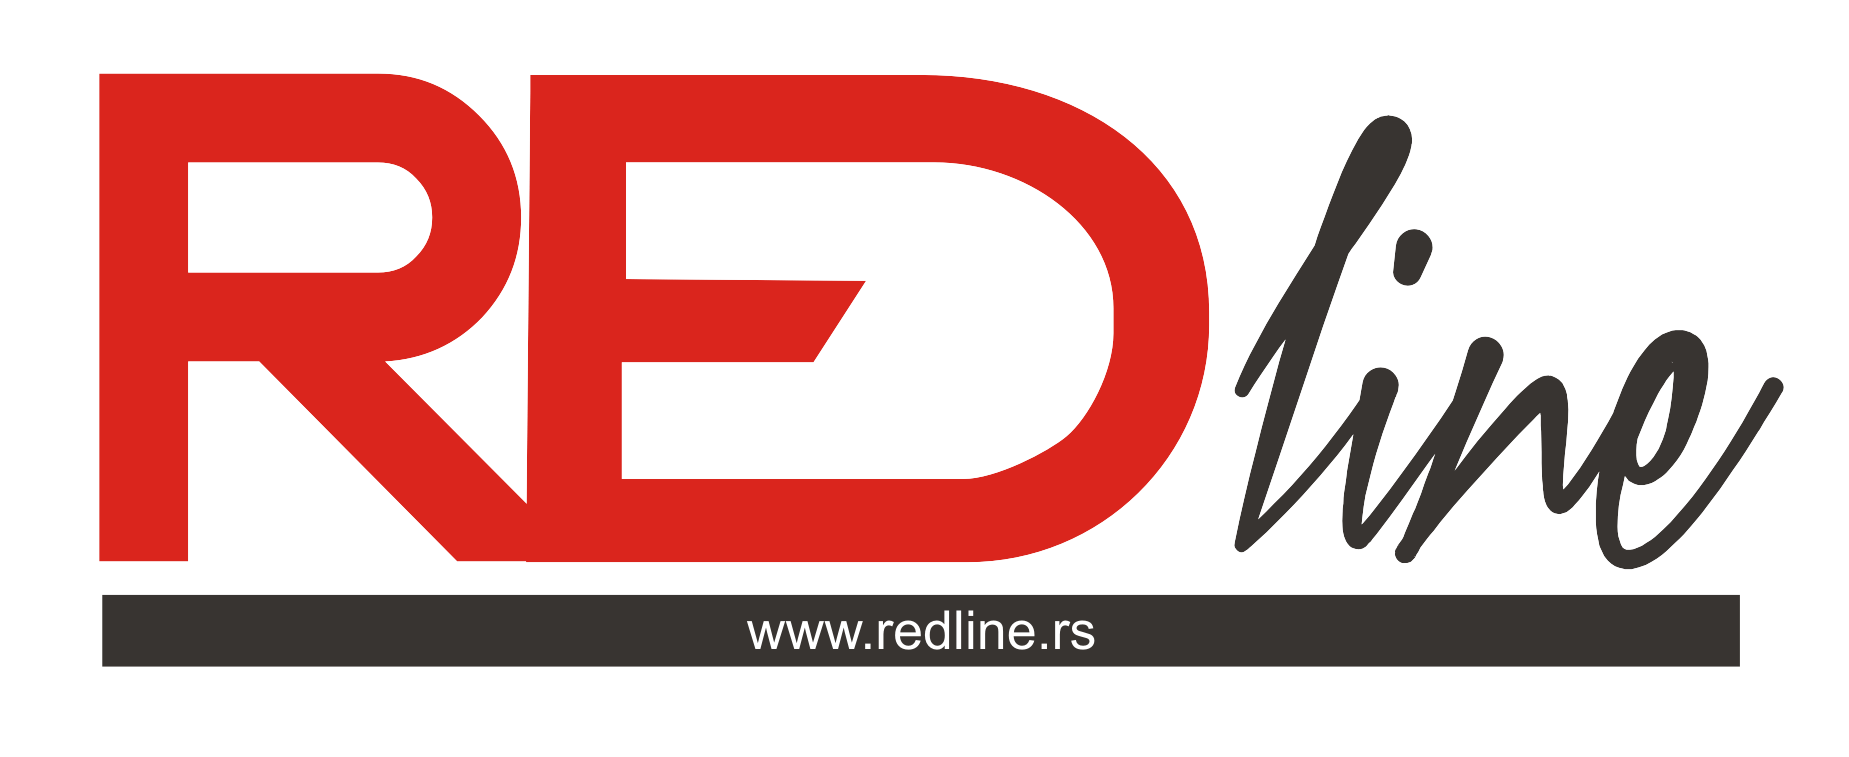 Redline Logo - Red Line